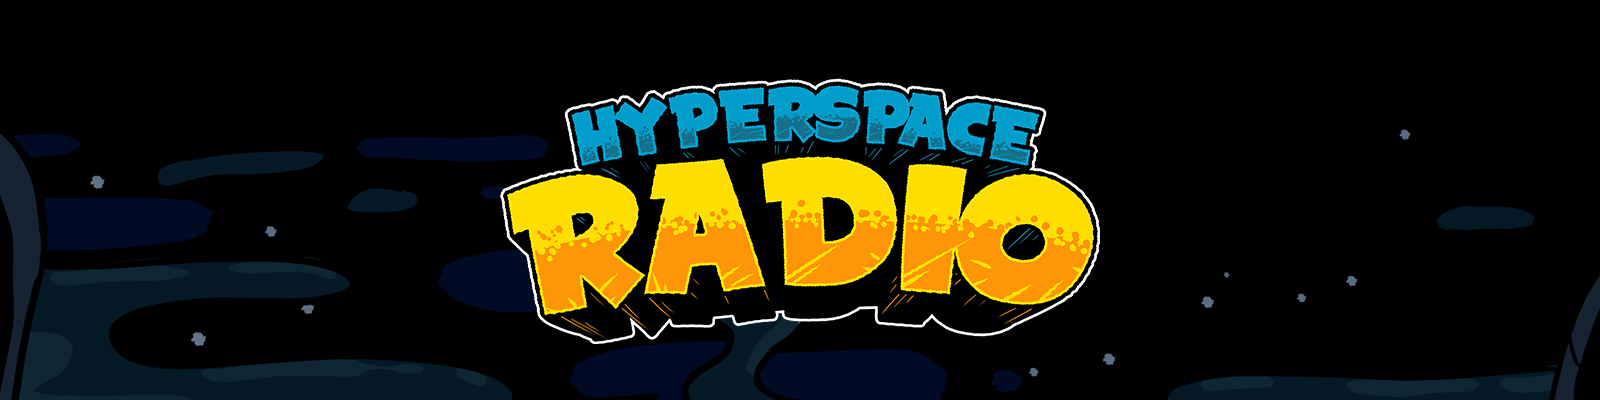 Hyperspace Radio